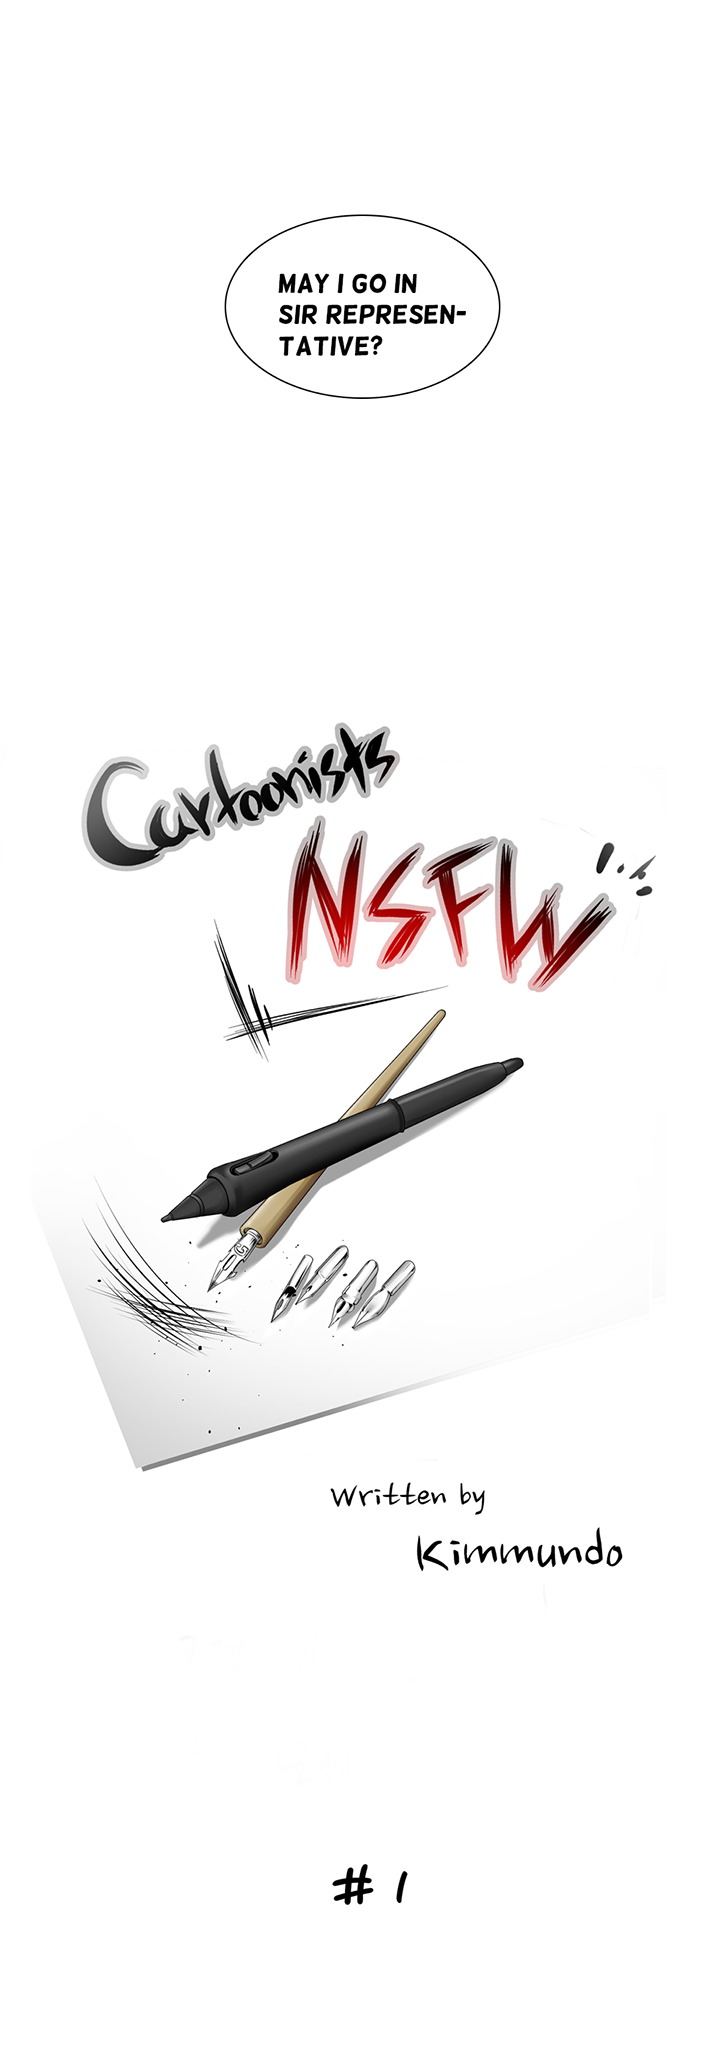 Cartoonist's NSFW Season 1 Chapter 1-10 (English) 